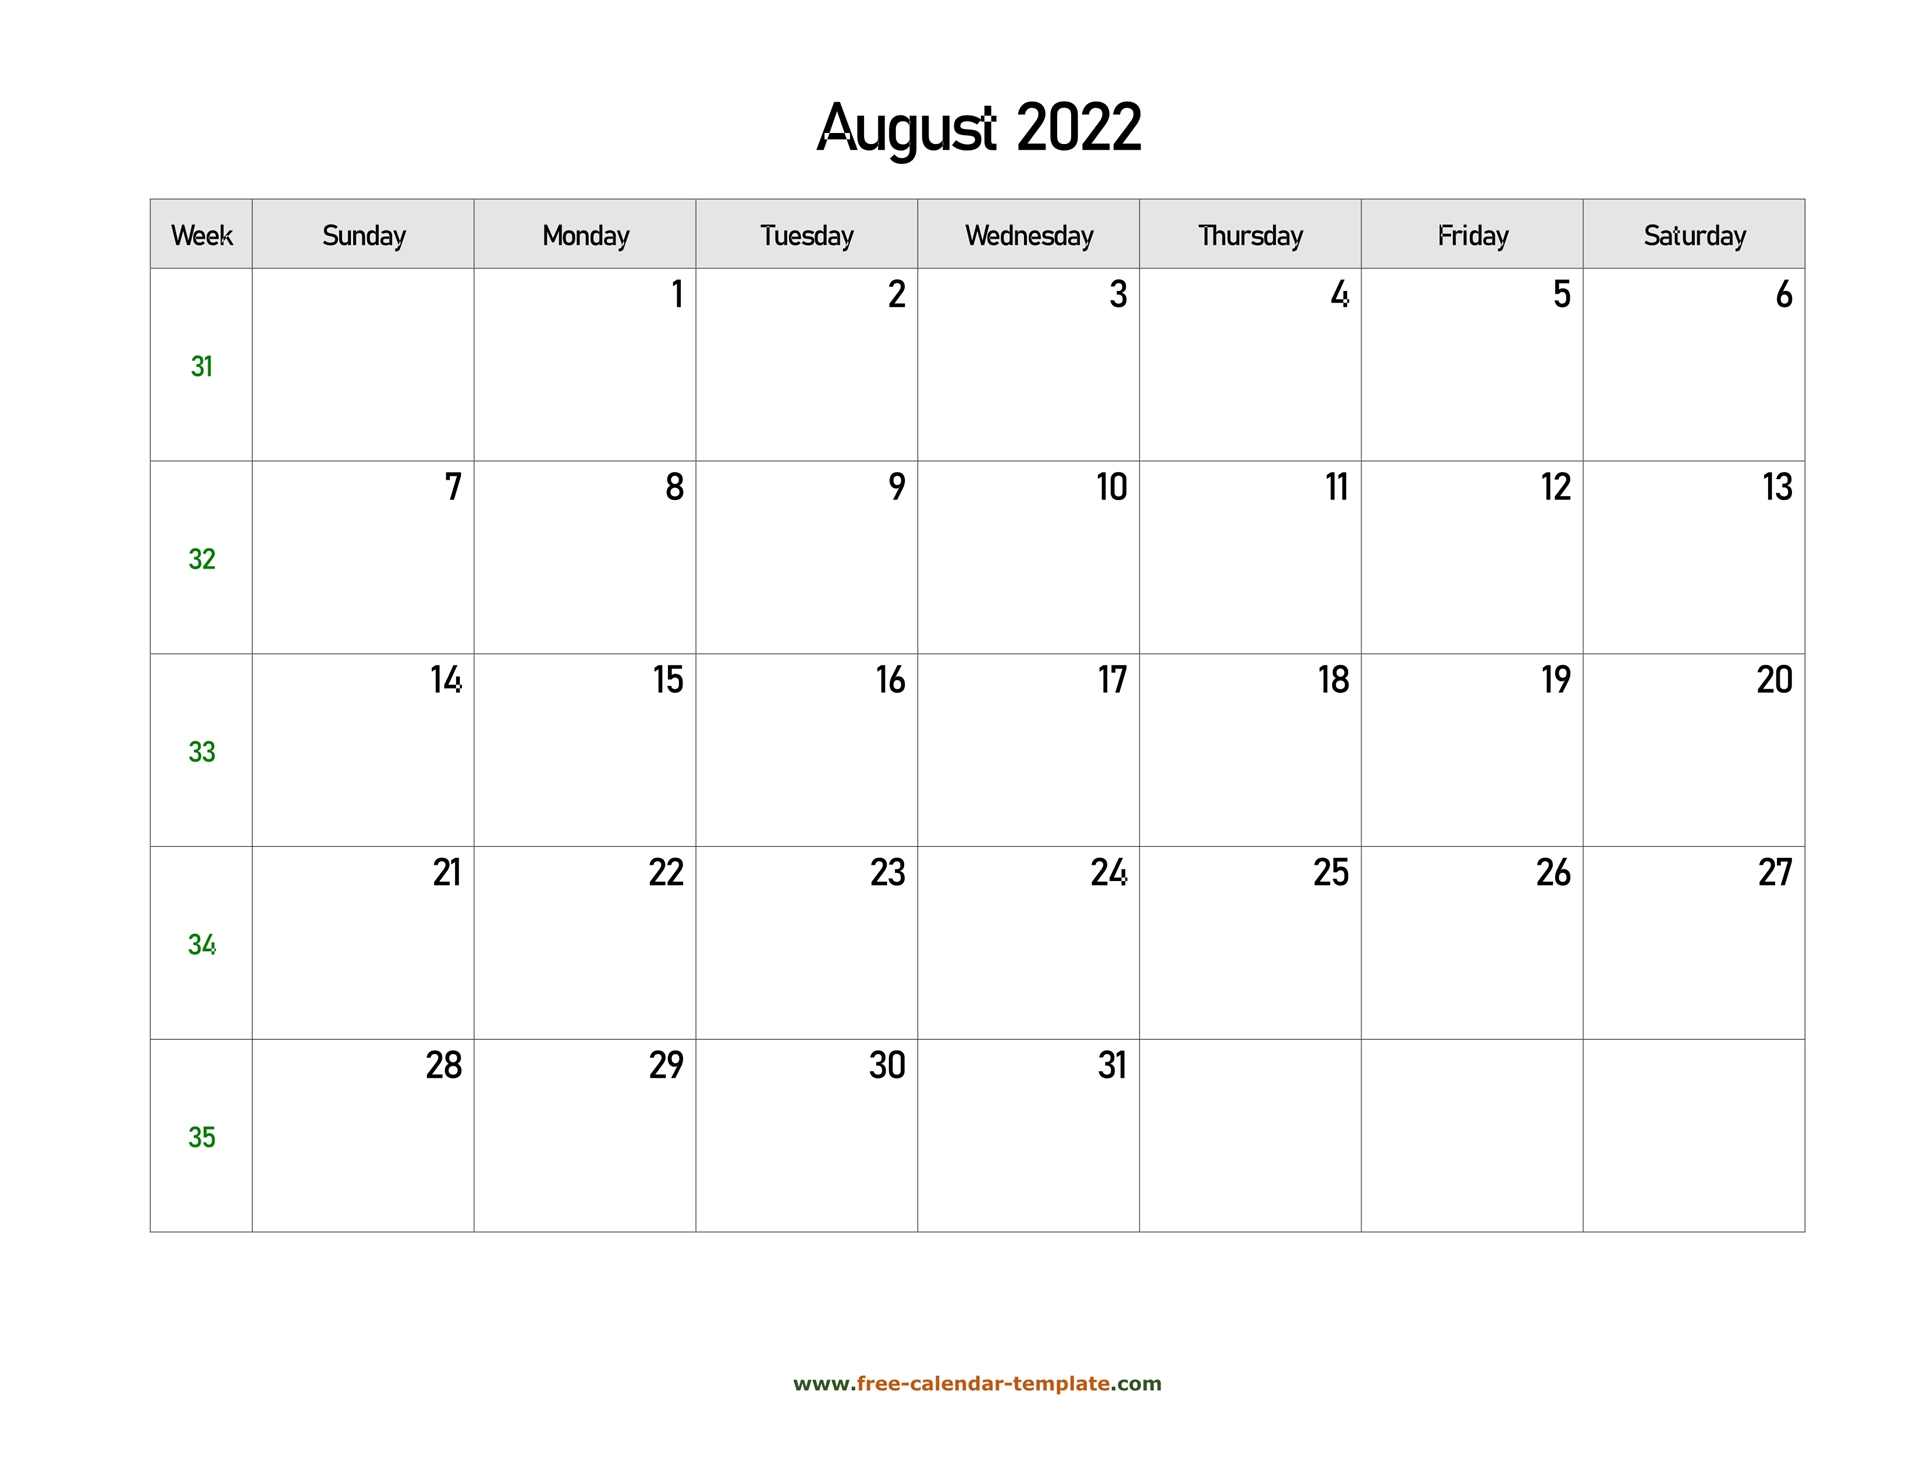 Catch August 2022 Calendar Image